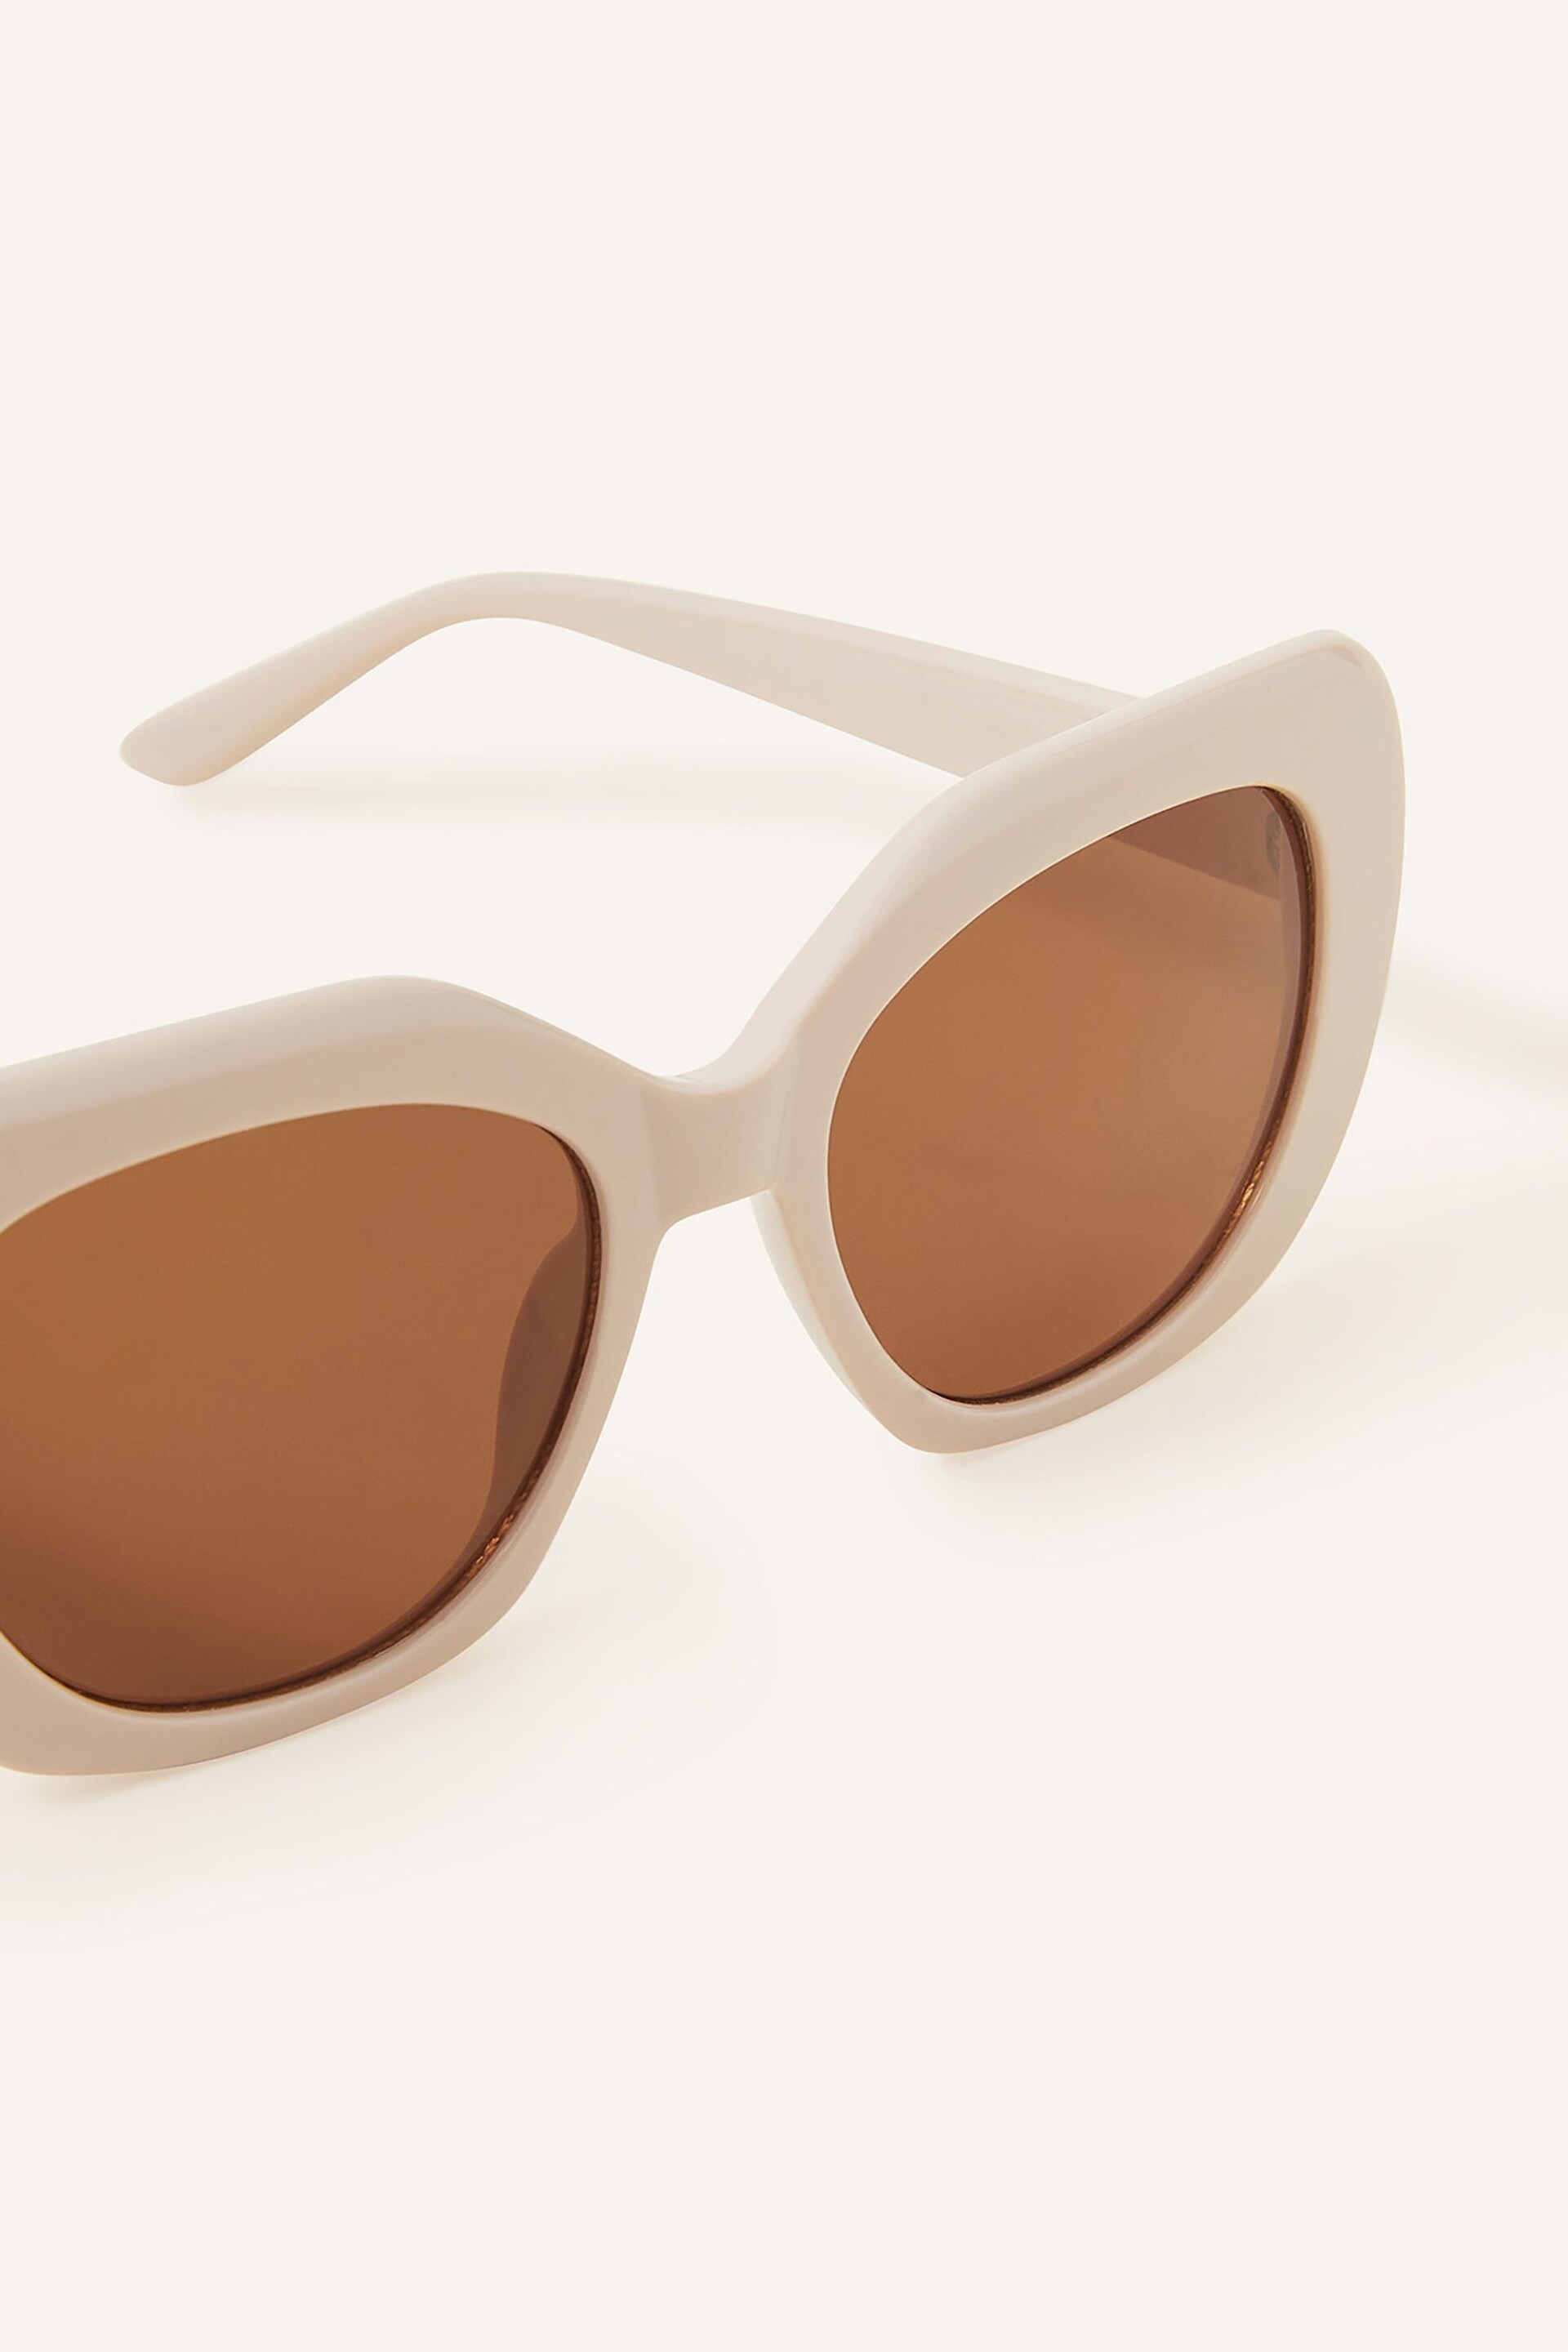 Accessorize Cream Oversized Soft Cateye Sunglasses - Image 2 of 3